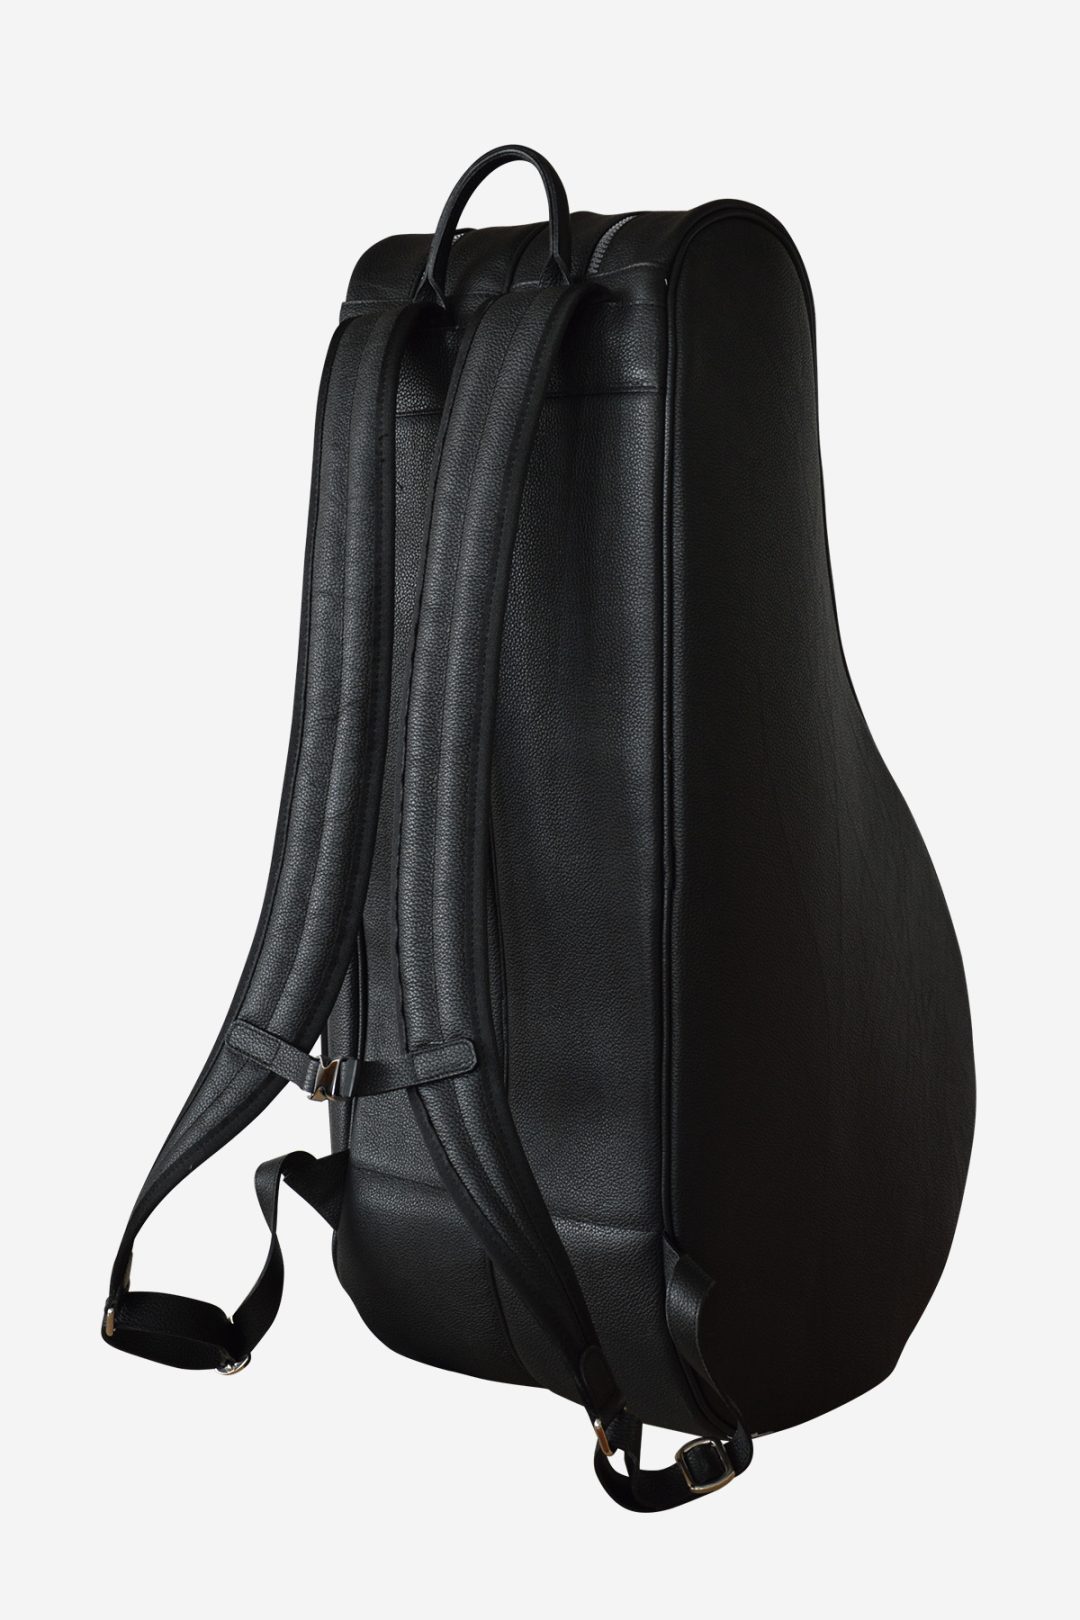 Terrida Italian Leather Tennis Racket Bag Single